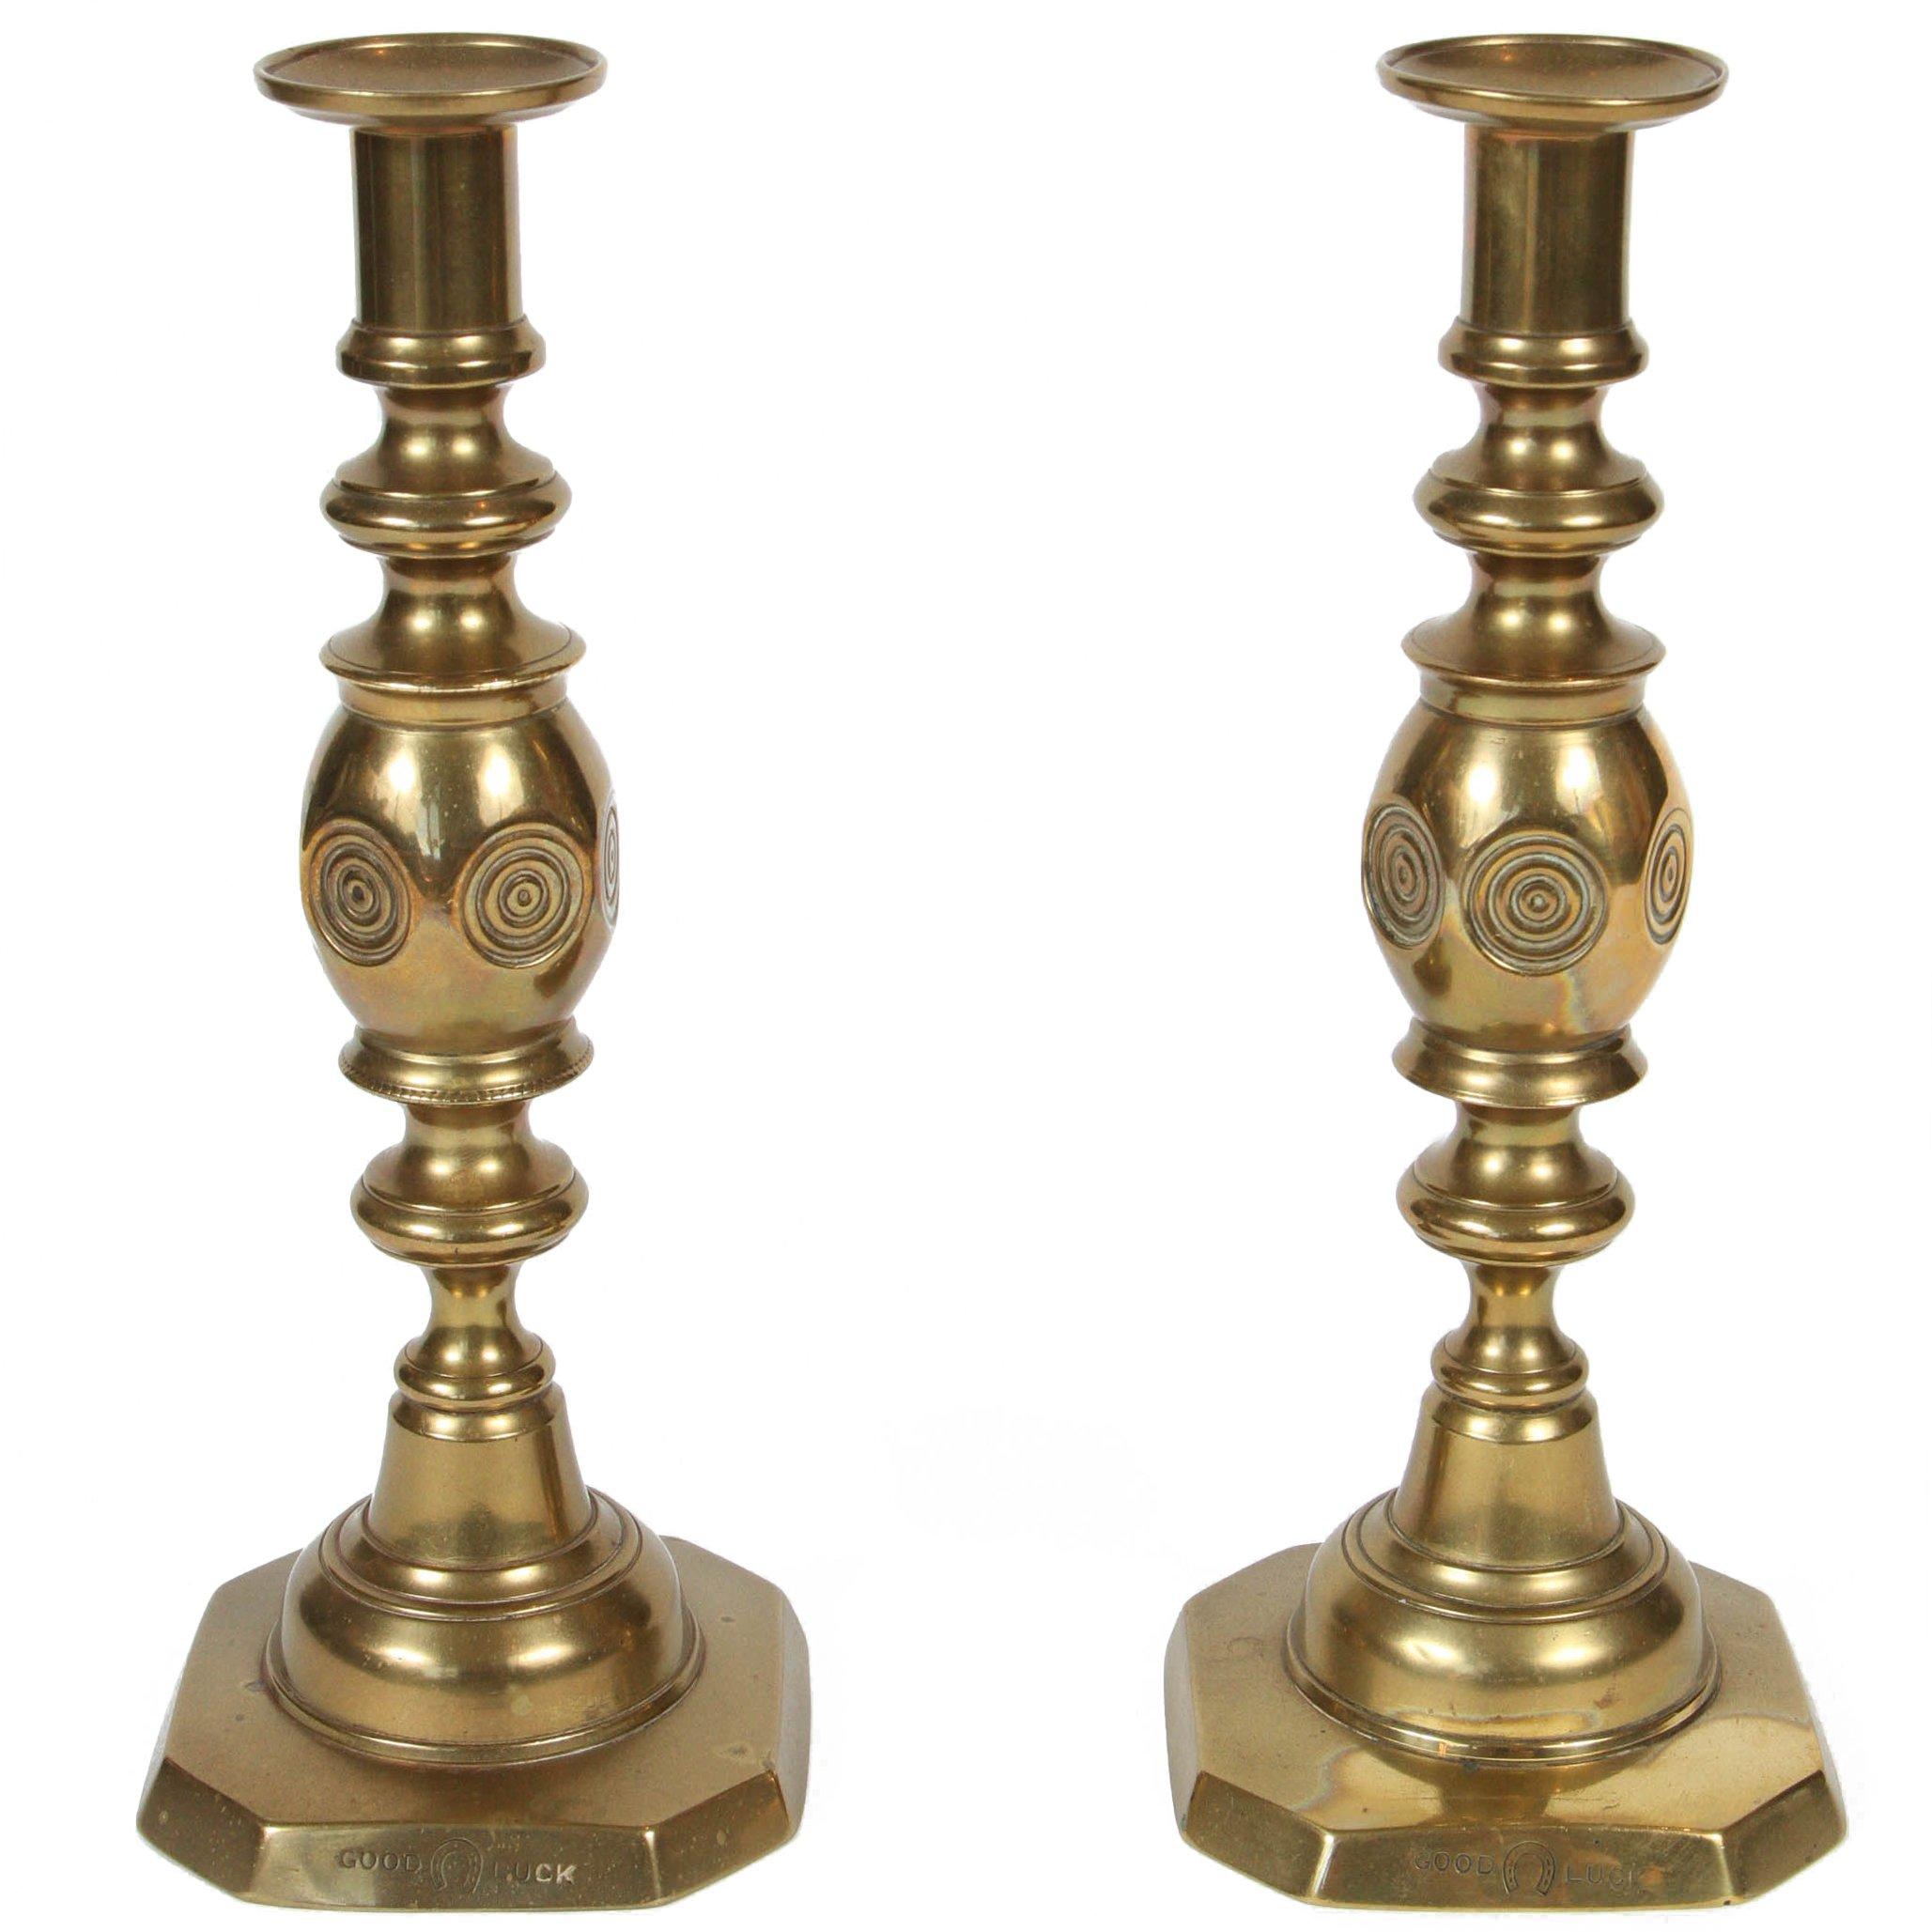 19th Century Pair of Brass Candlesticks